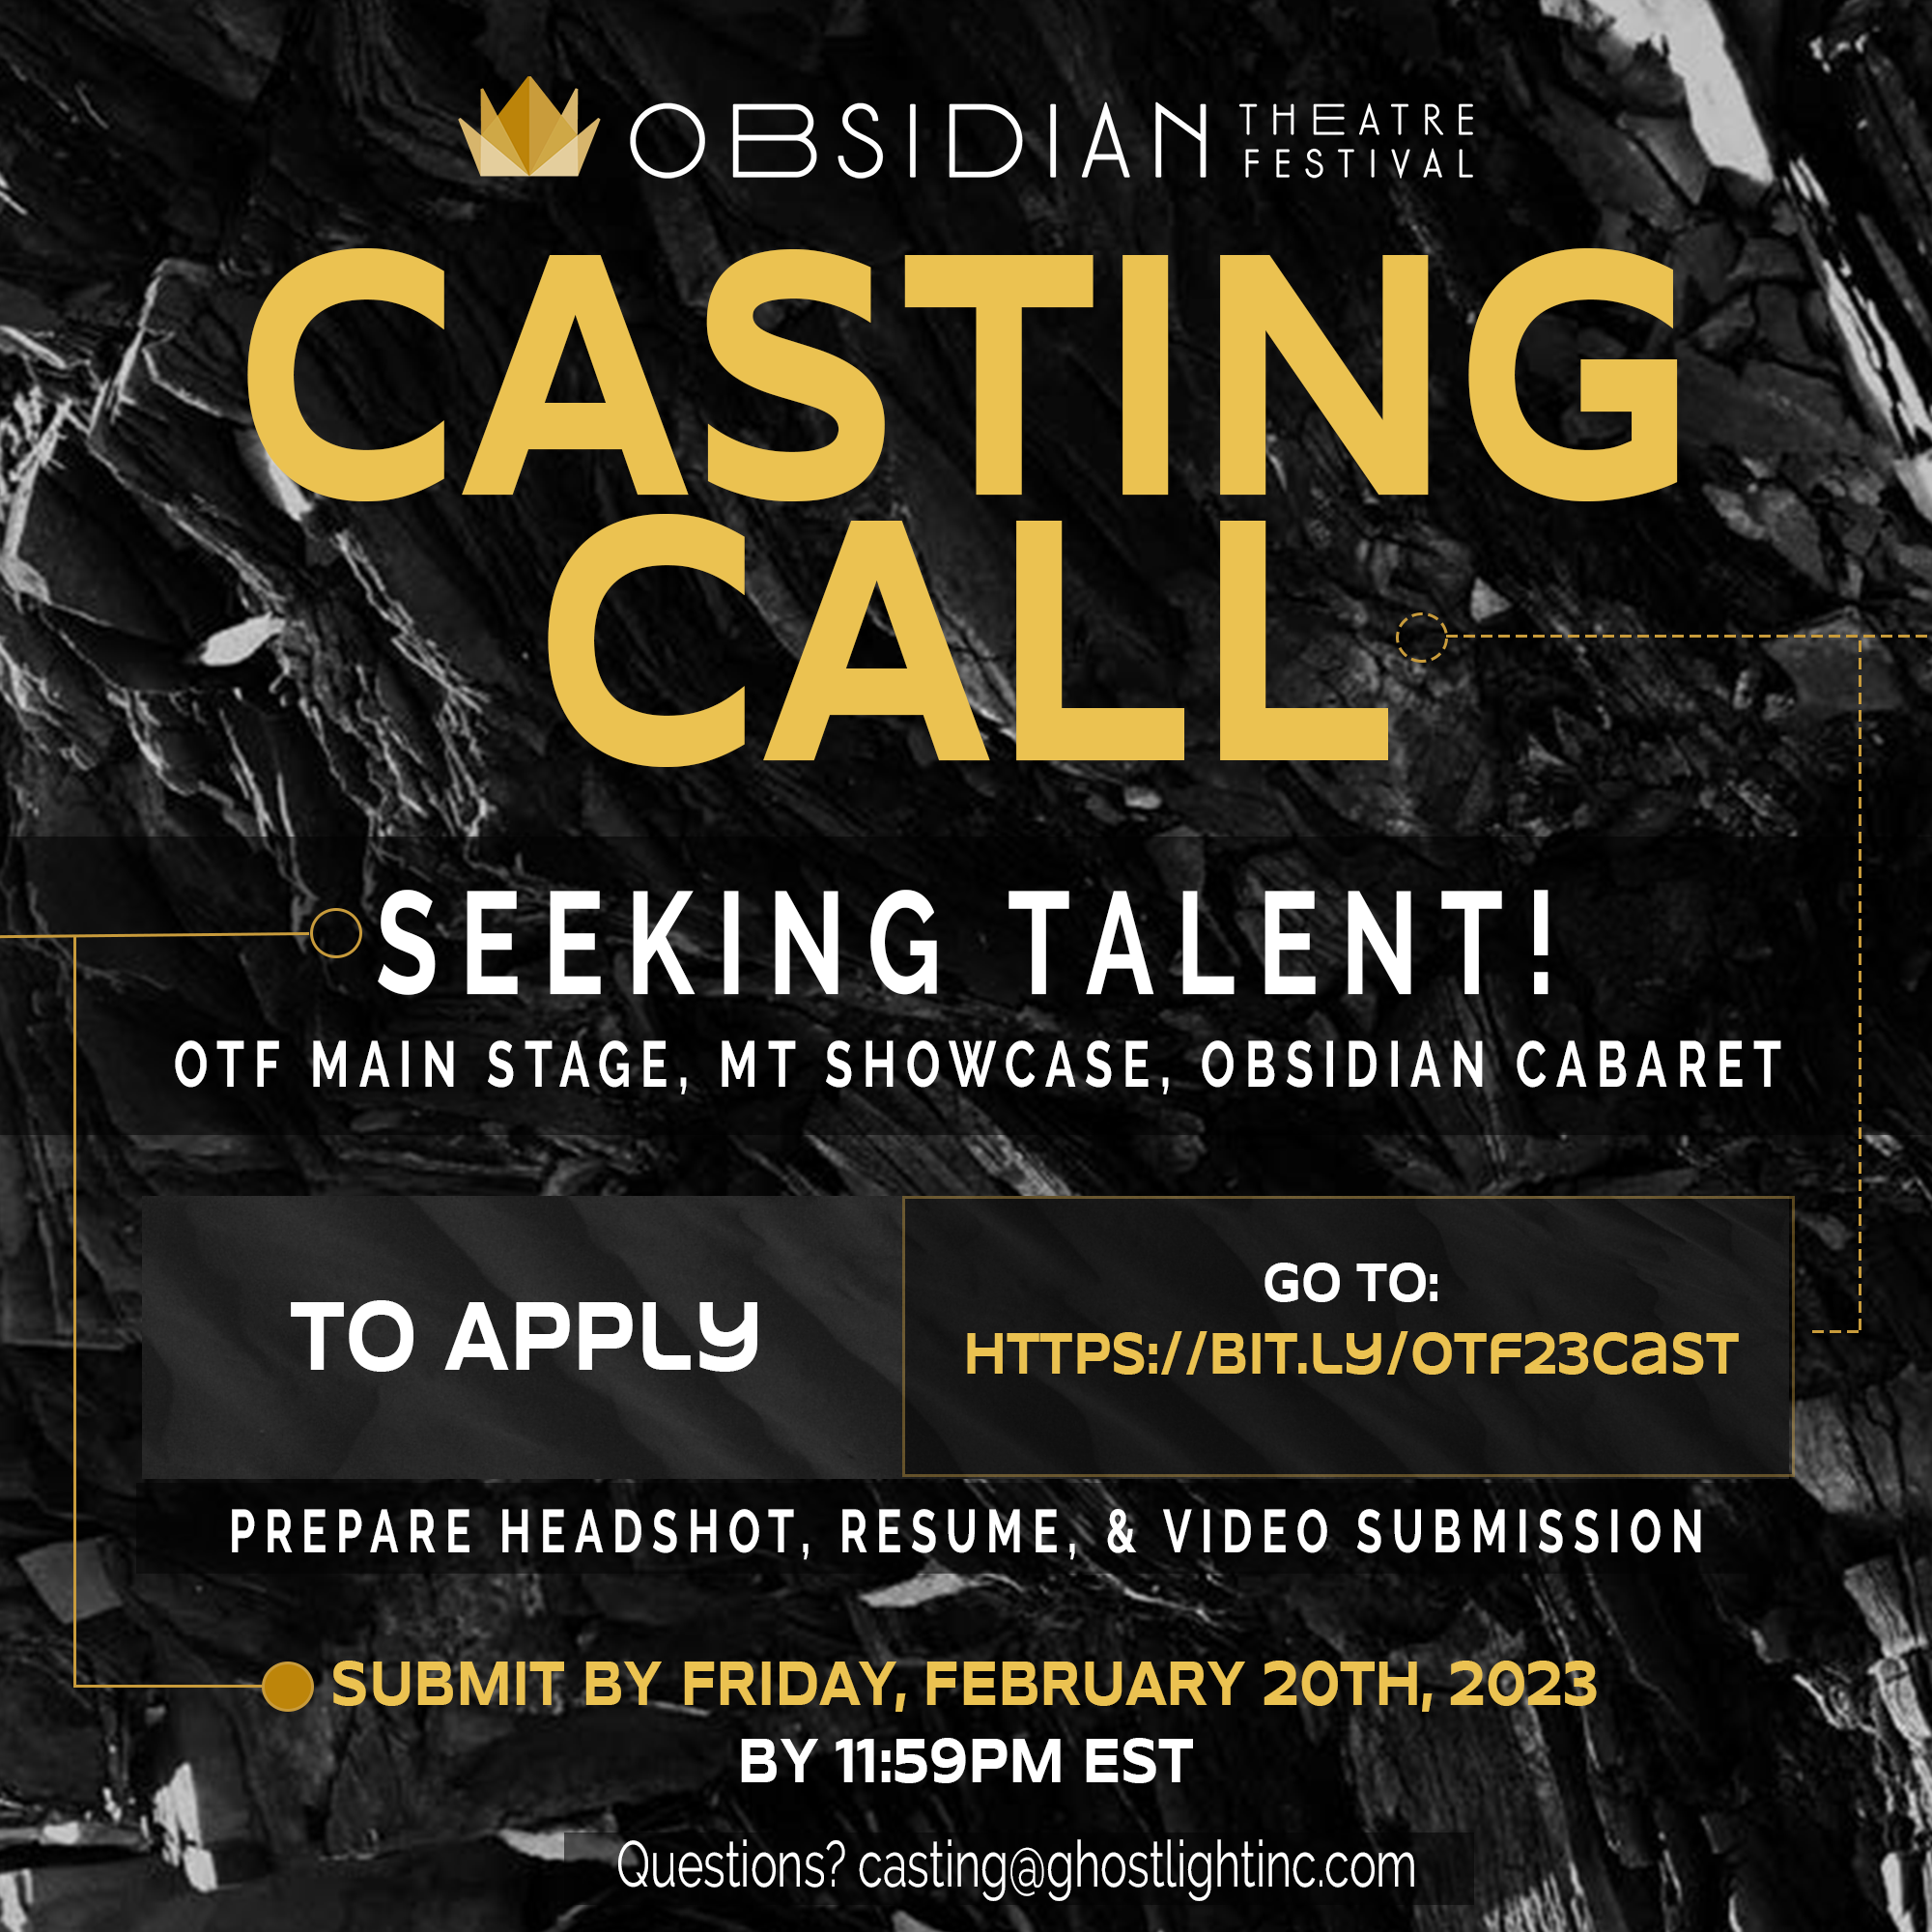 Obsidian Theatre Festival 2023 Casting Call